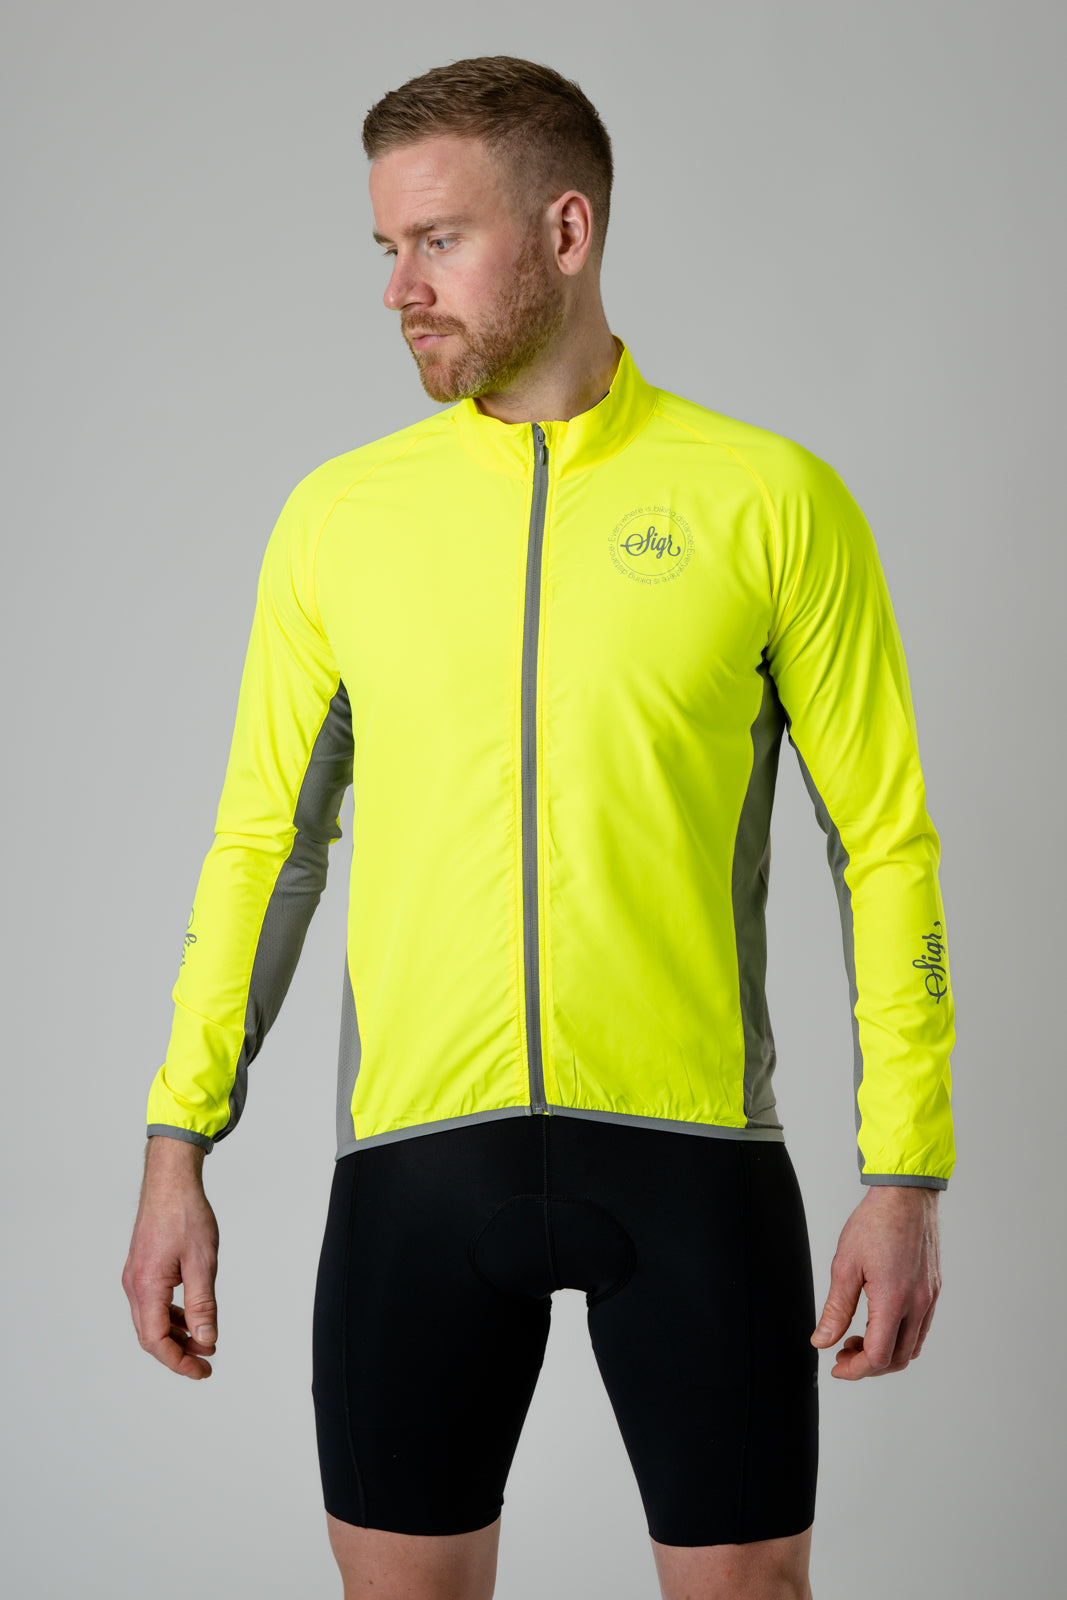 Uppsala Yellow - Hi-Viz Road Cycling Wind Jacket for Men